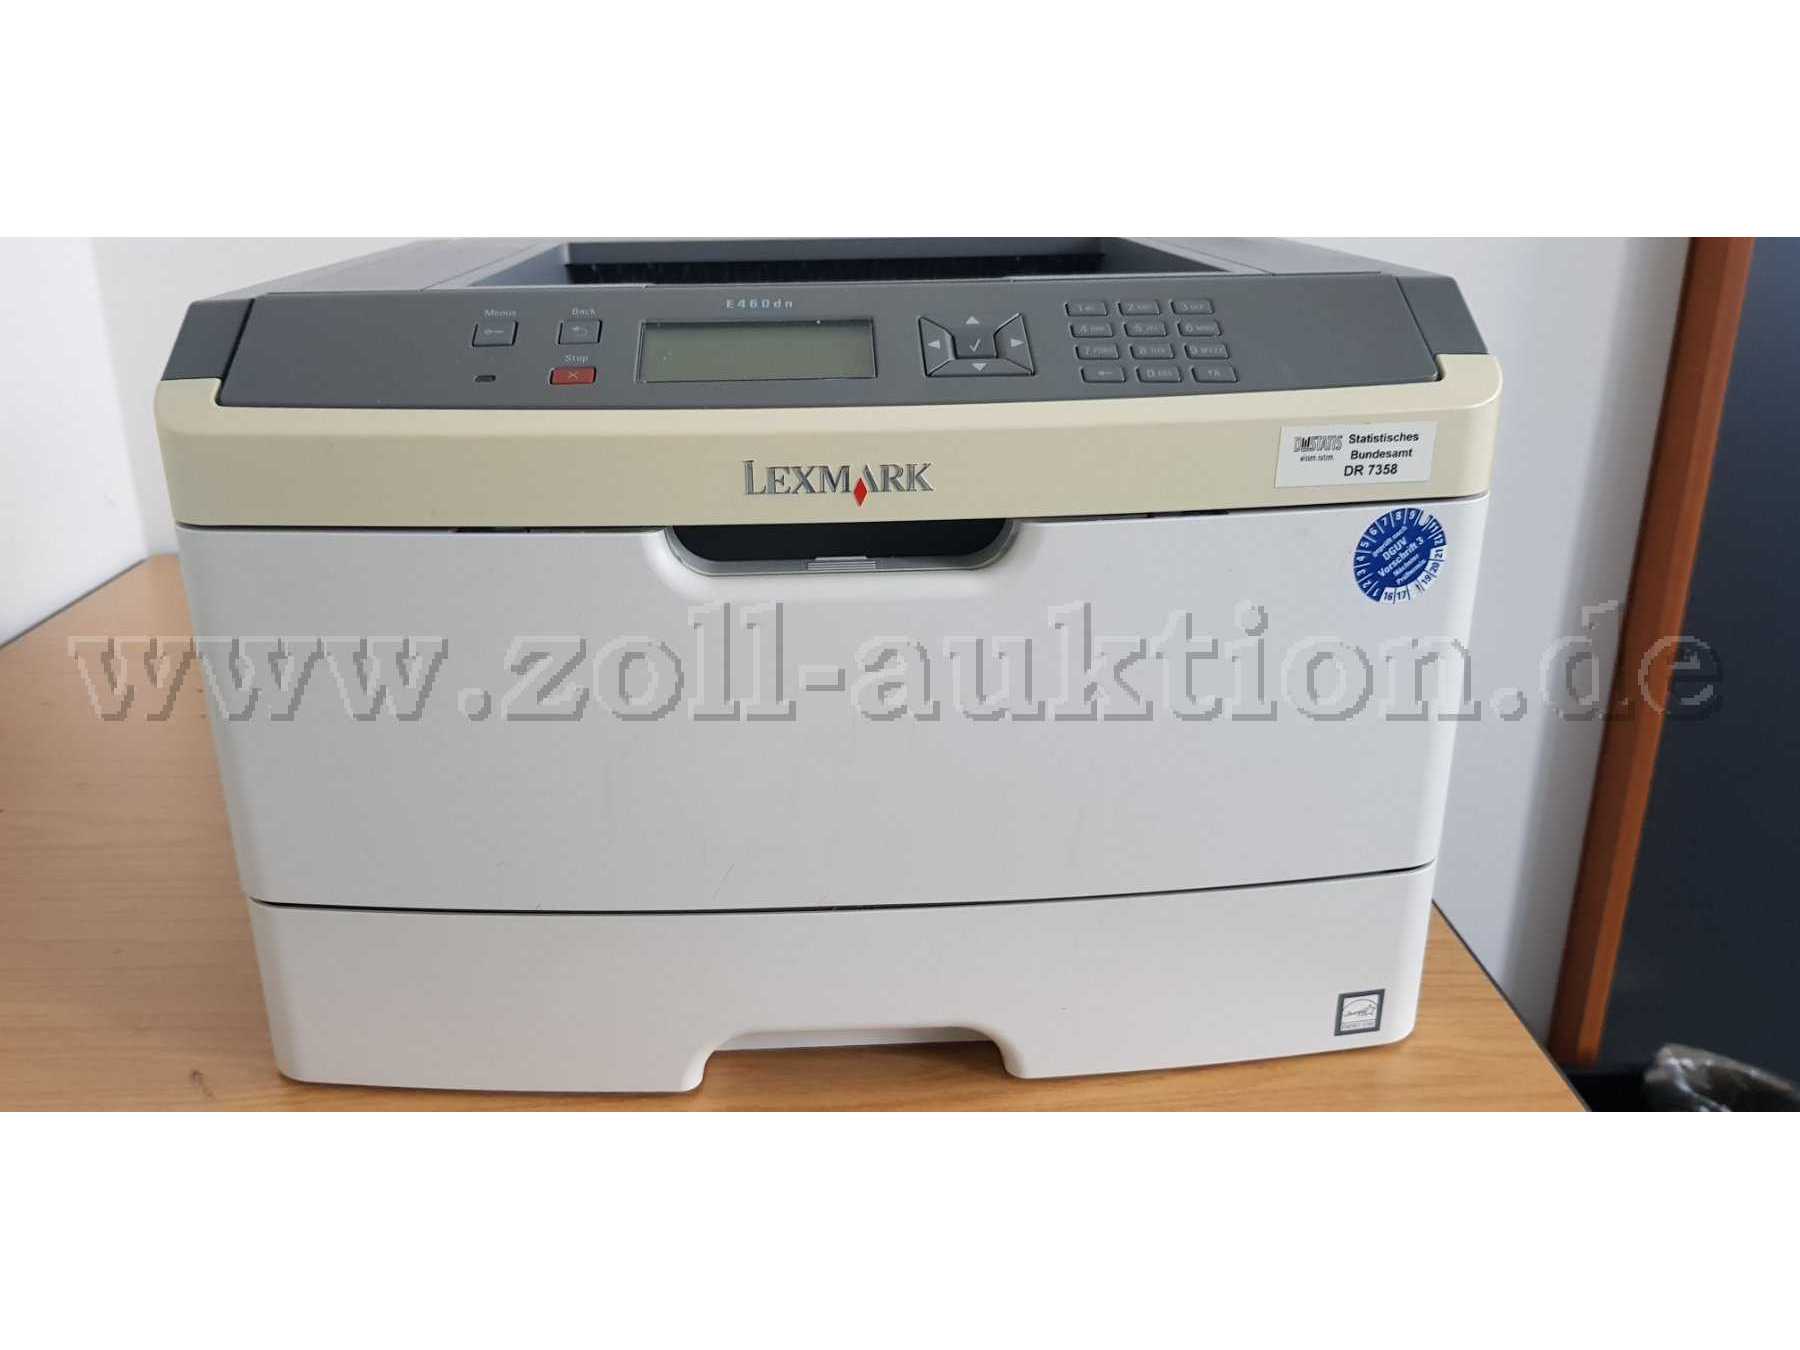 Laserdrucker Lexmark "E460dn" - Frontansicht